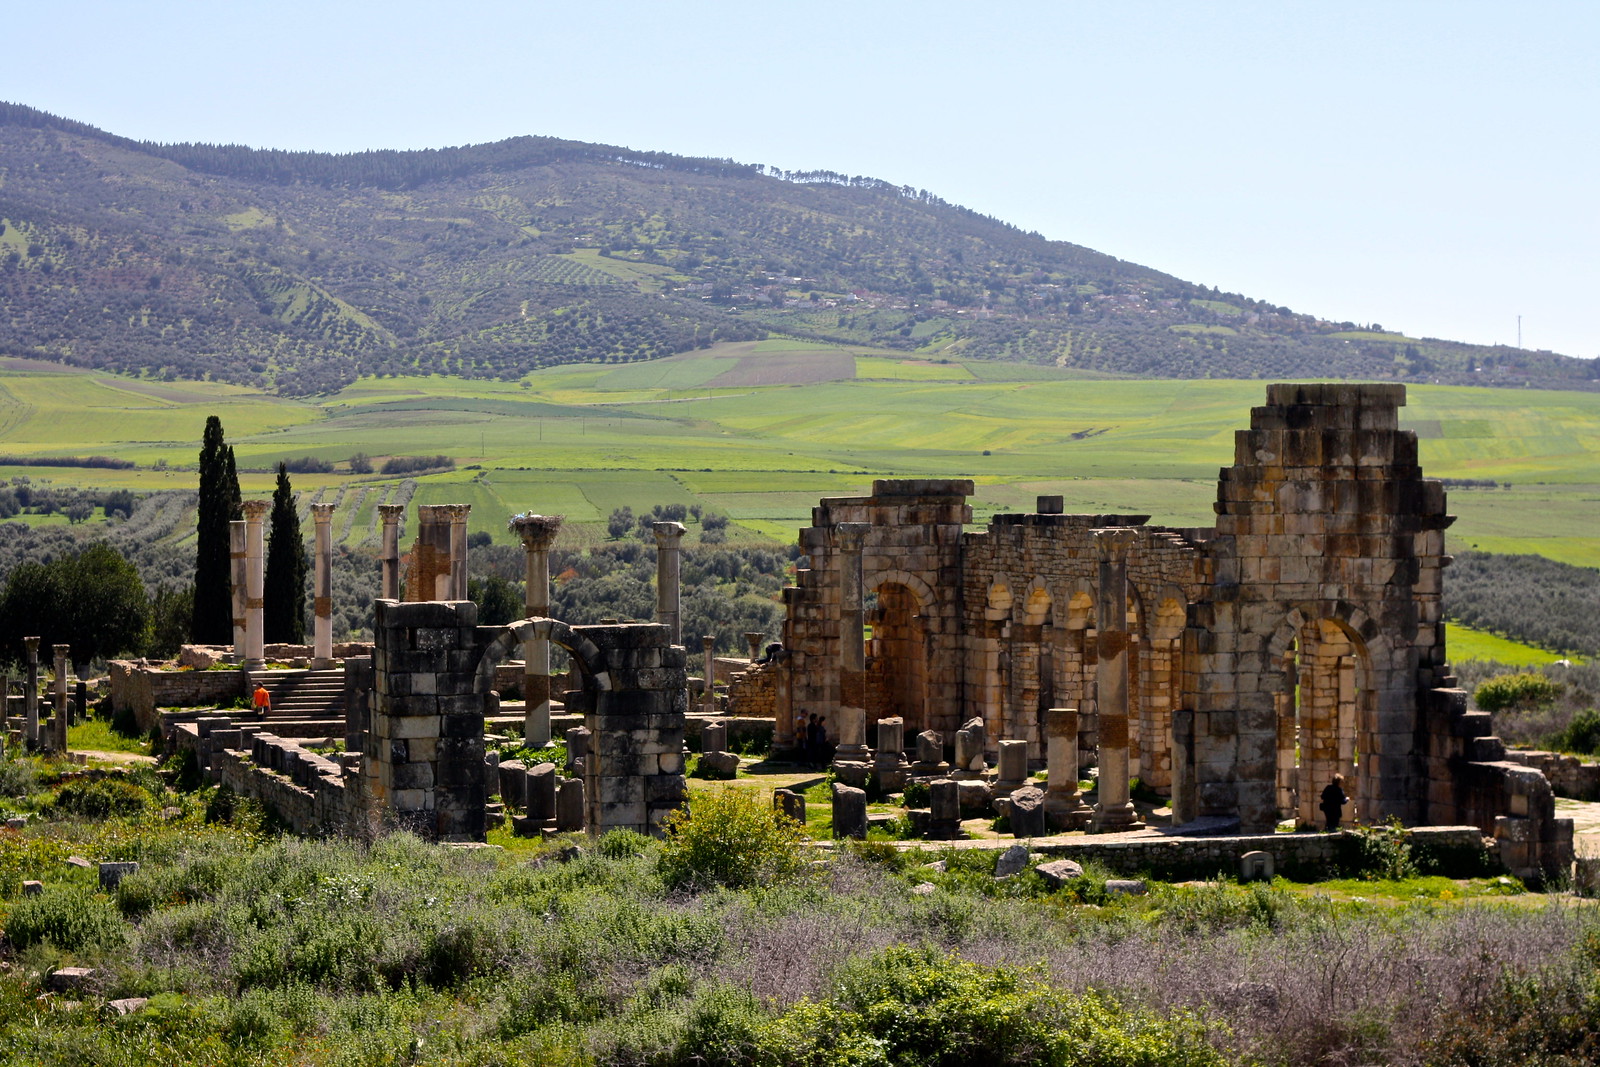 Roman ruins of Volubilis, Morocco